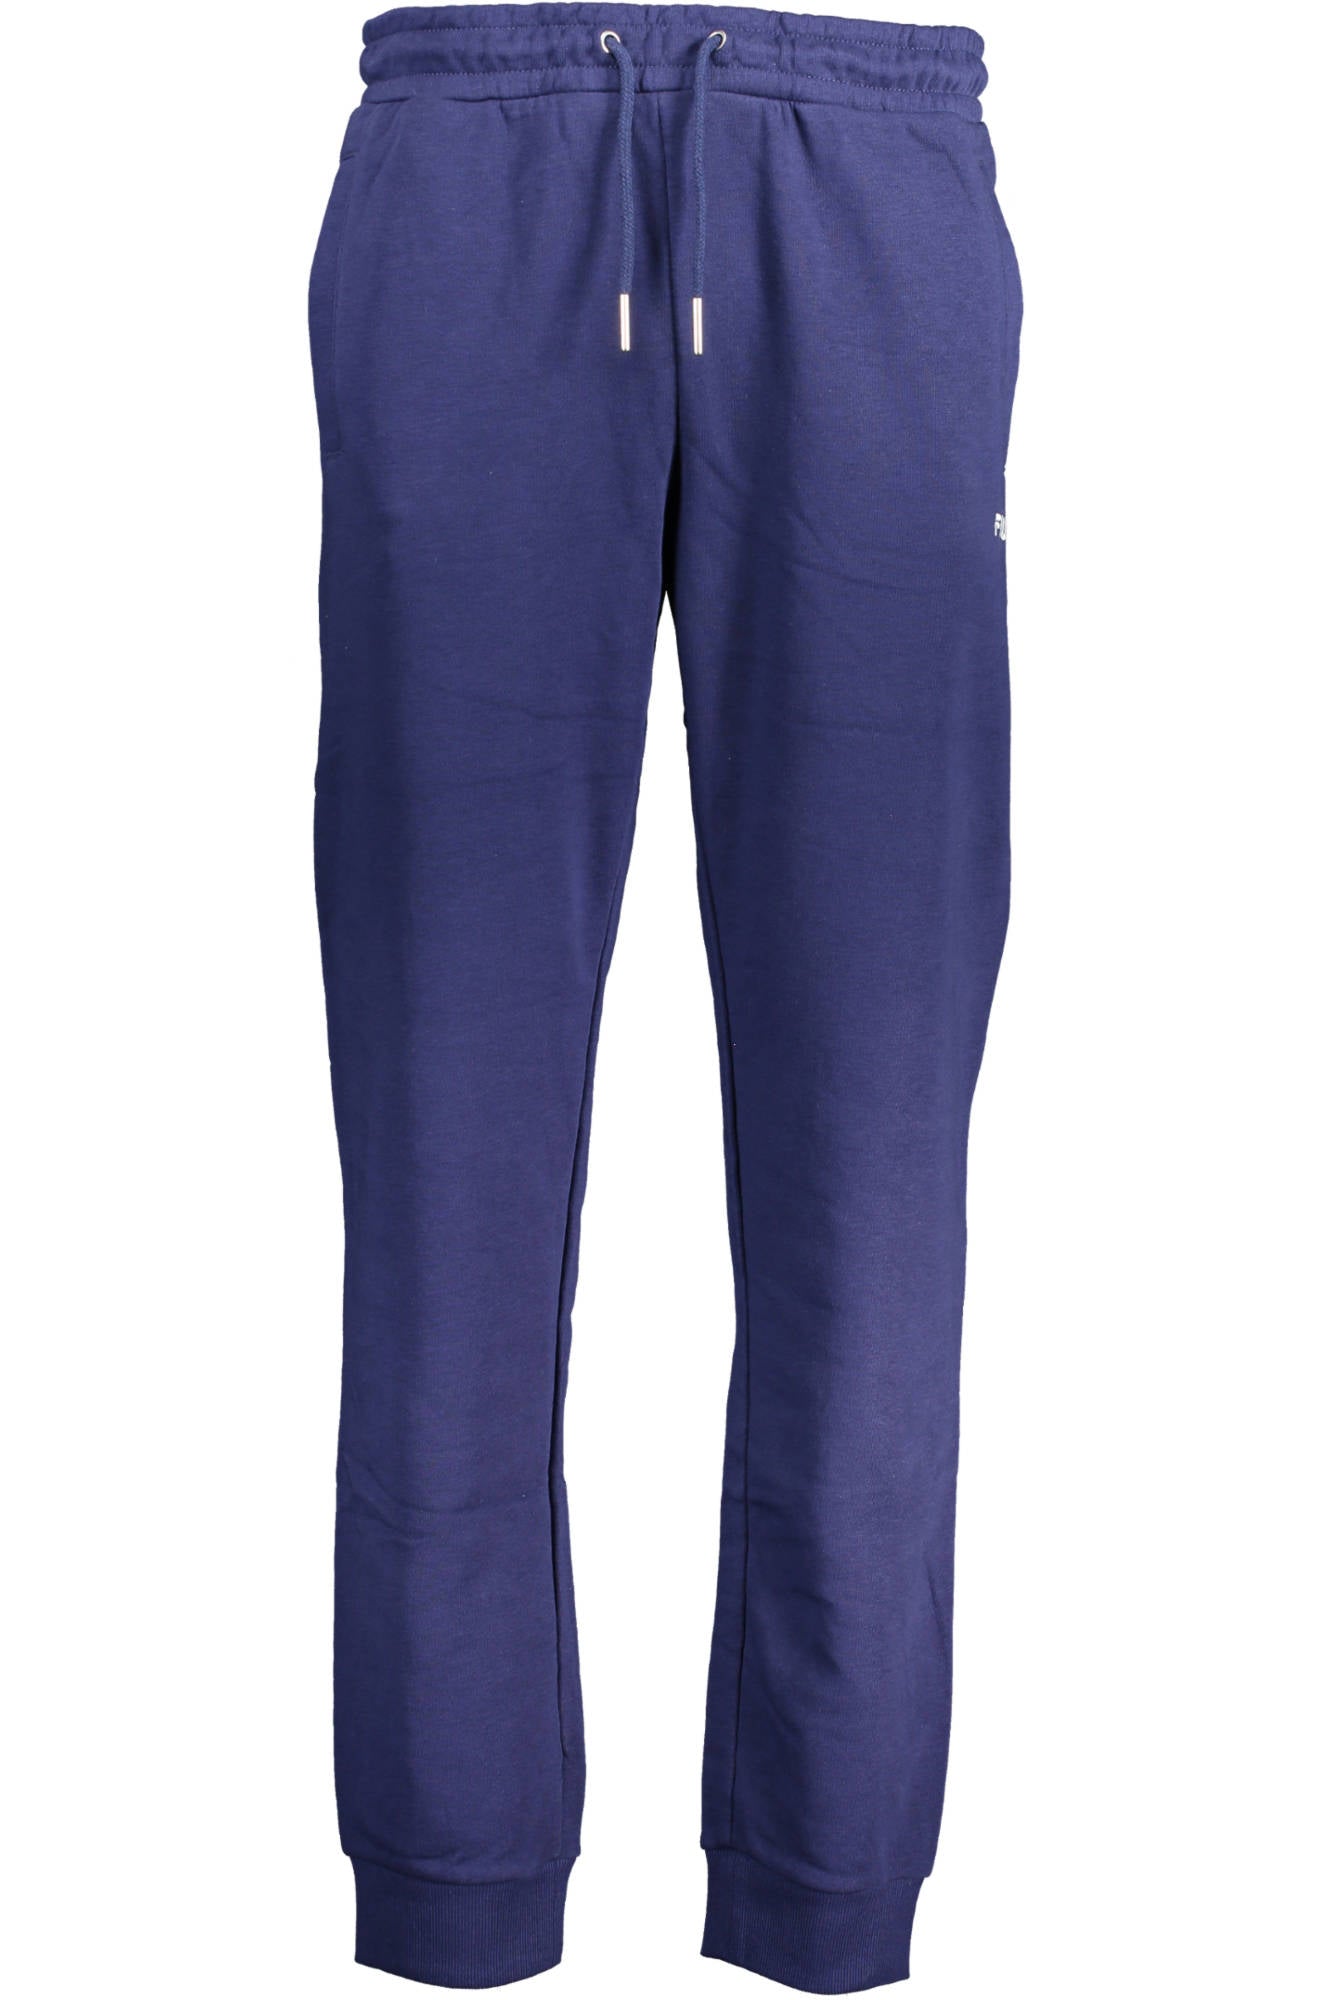 Fila Blue Cotton Jeans & Pant - Fizigo